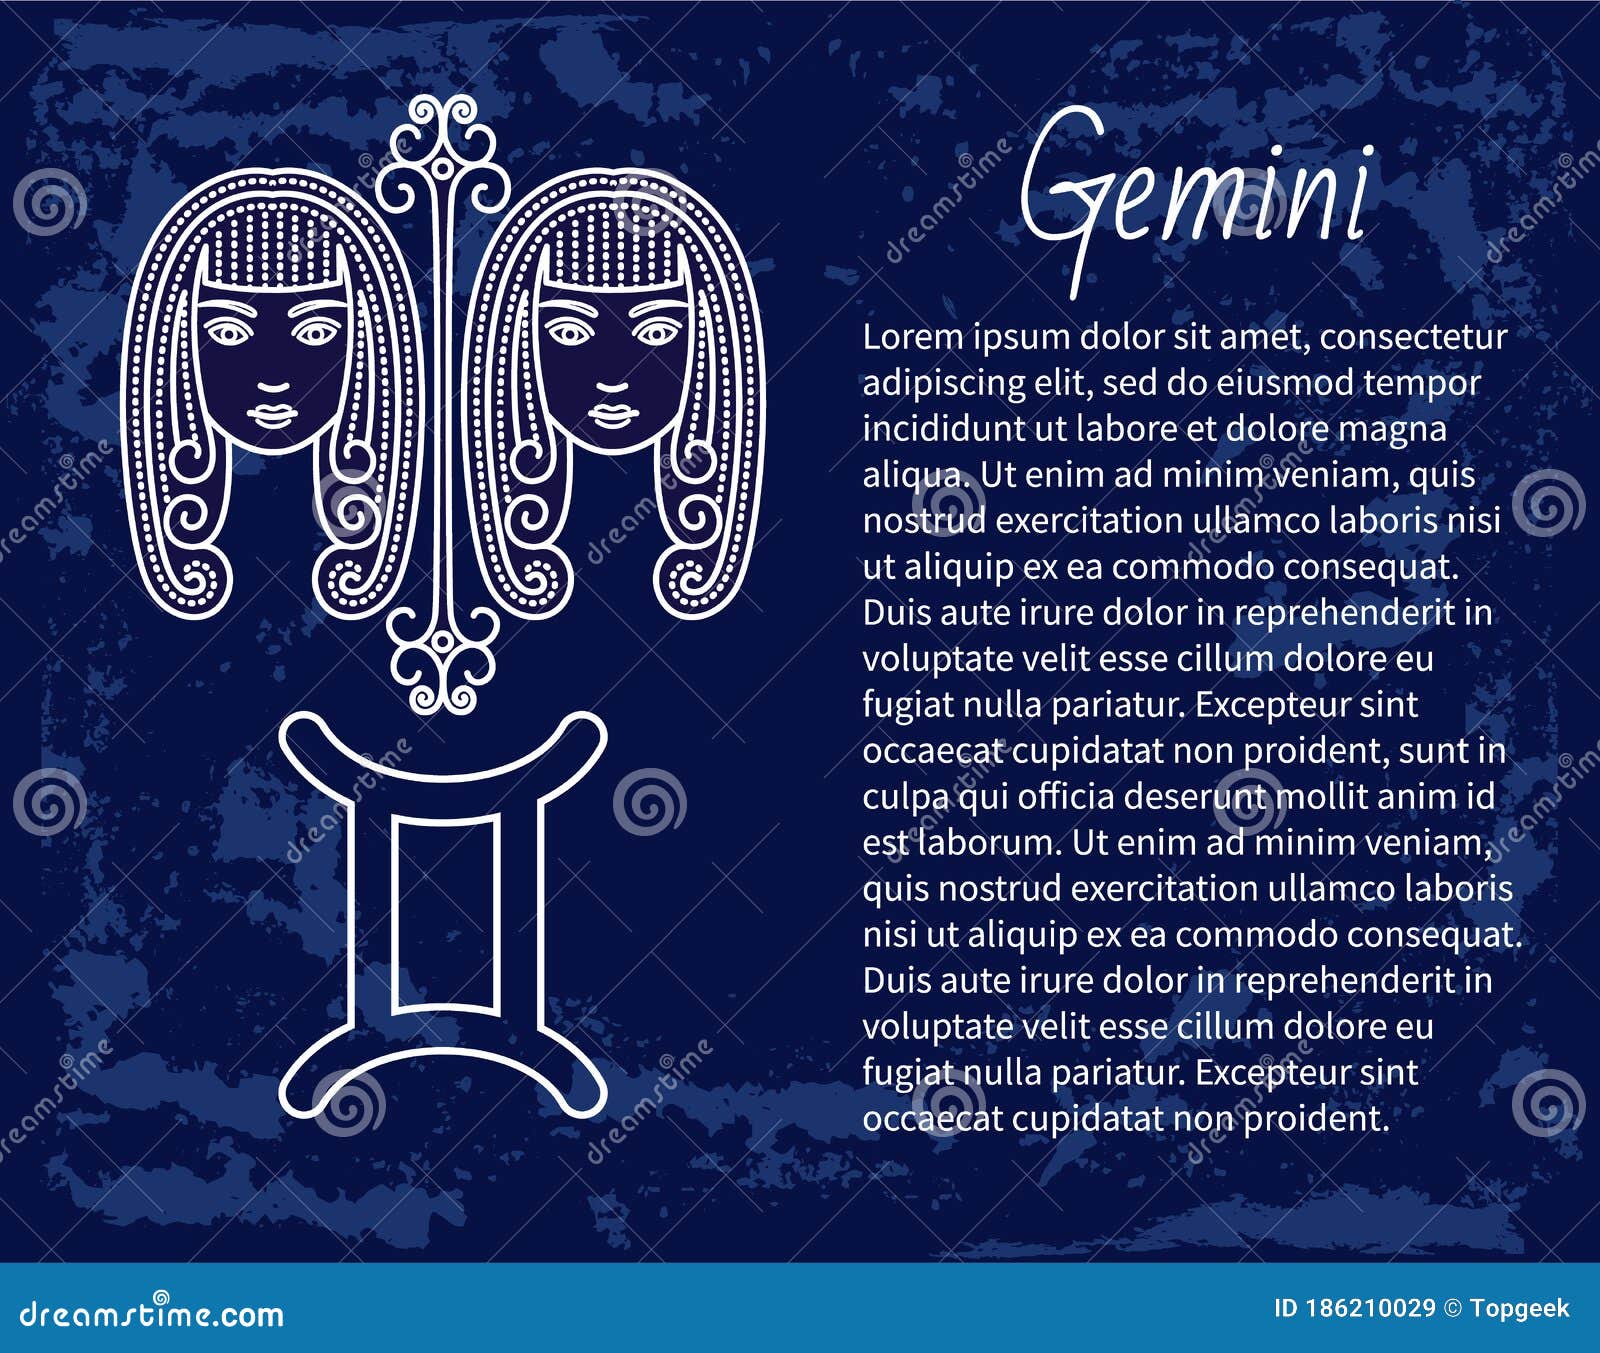 Gemini Zodiac Sign of Twins, Horoscope Astrology Stock Vector